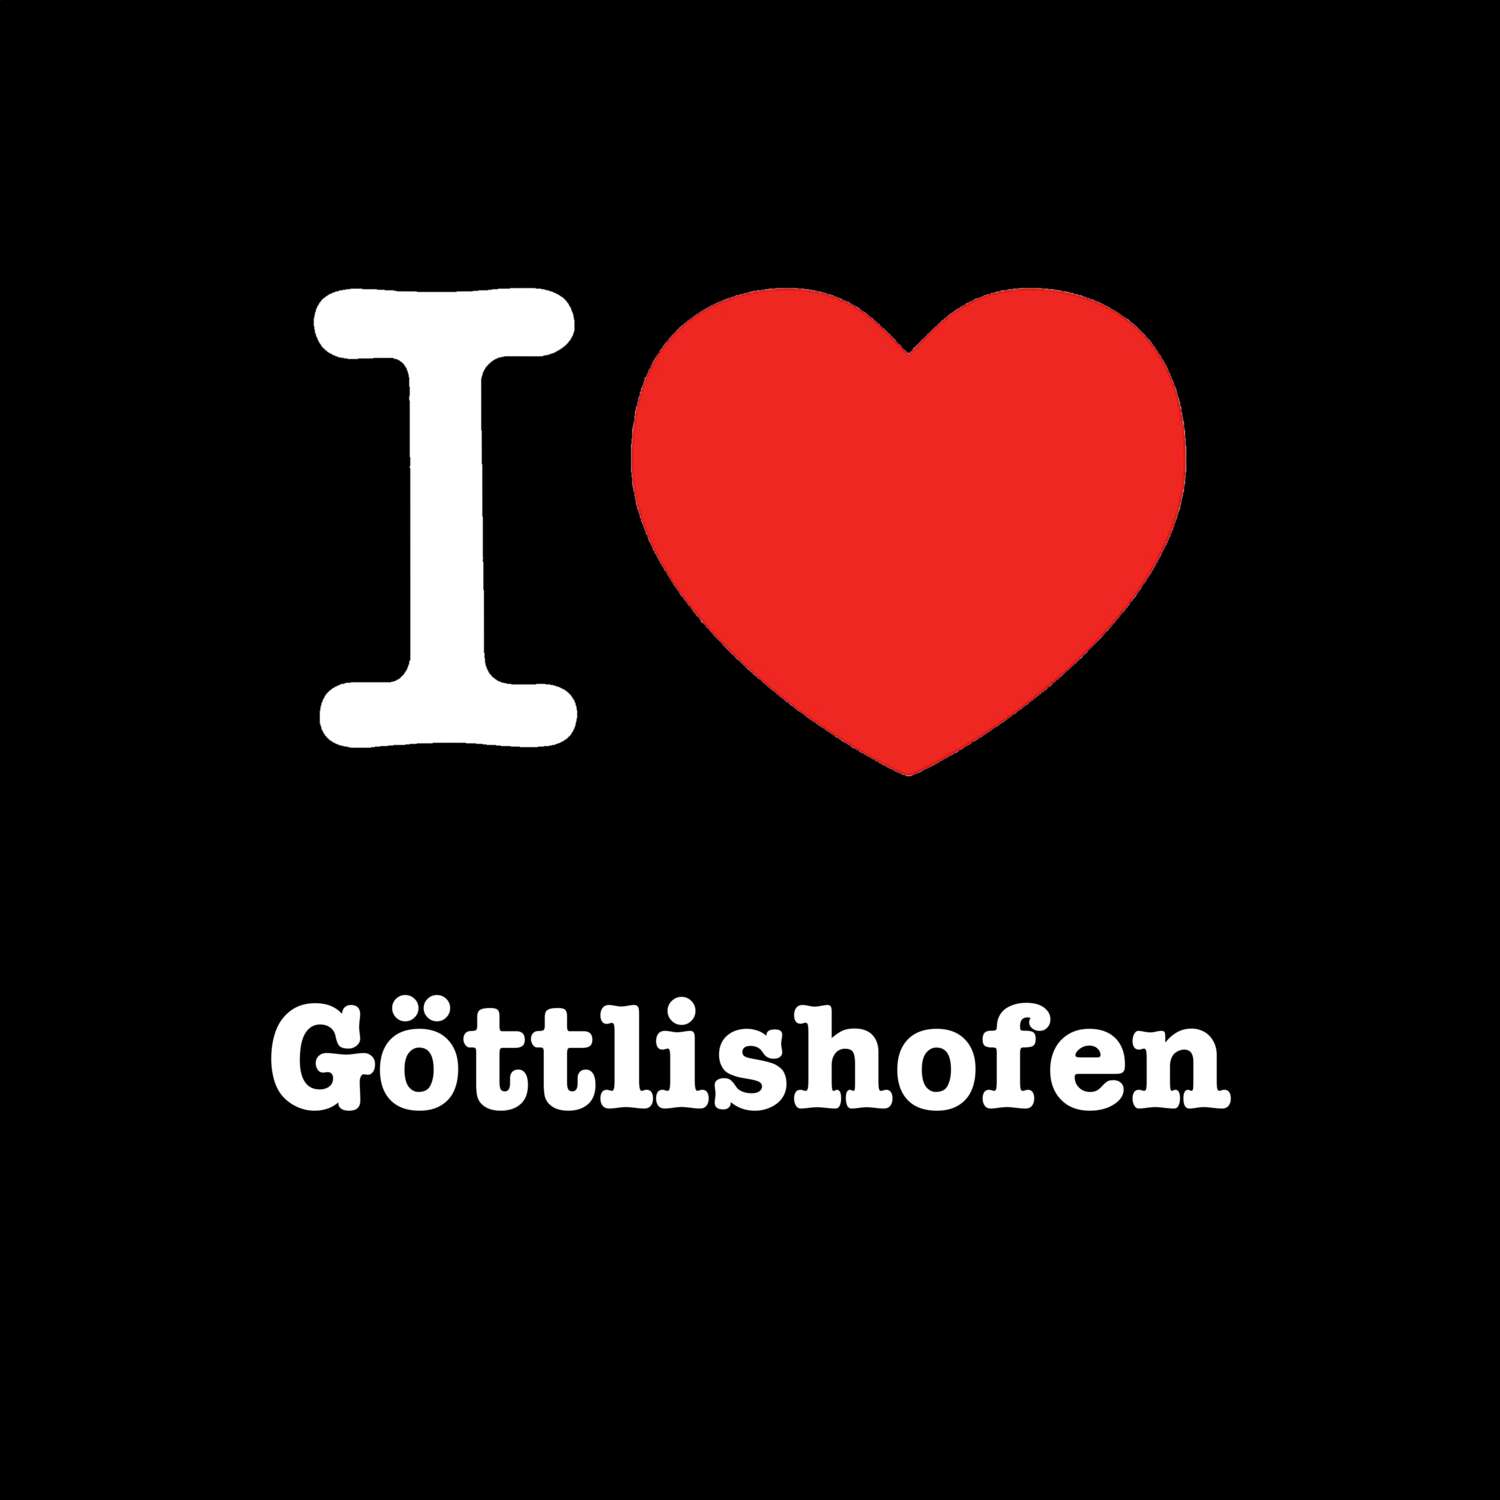 Göttlishofen T-Shirt »I love«